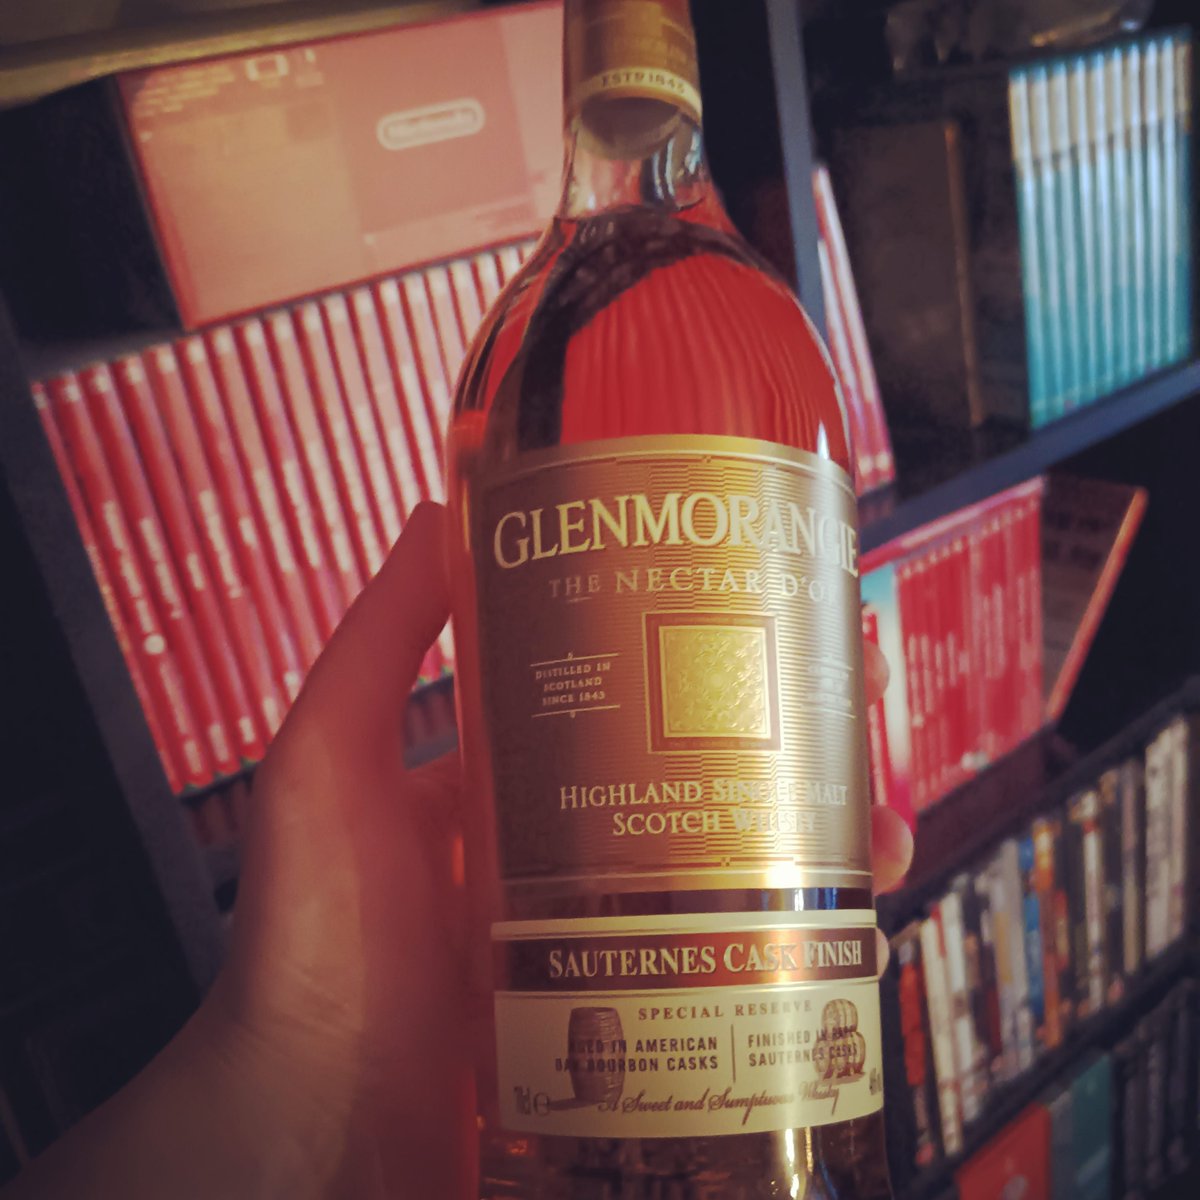 Celebrating some accomplishments tonight with Glenmorangie nectar d'or (sauternes cask) #Scotland